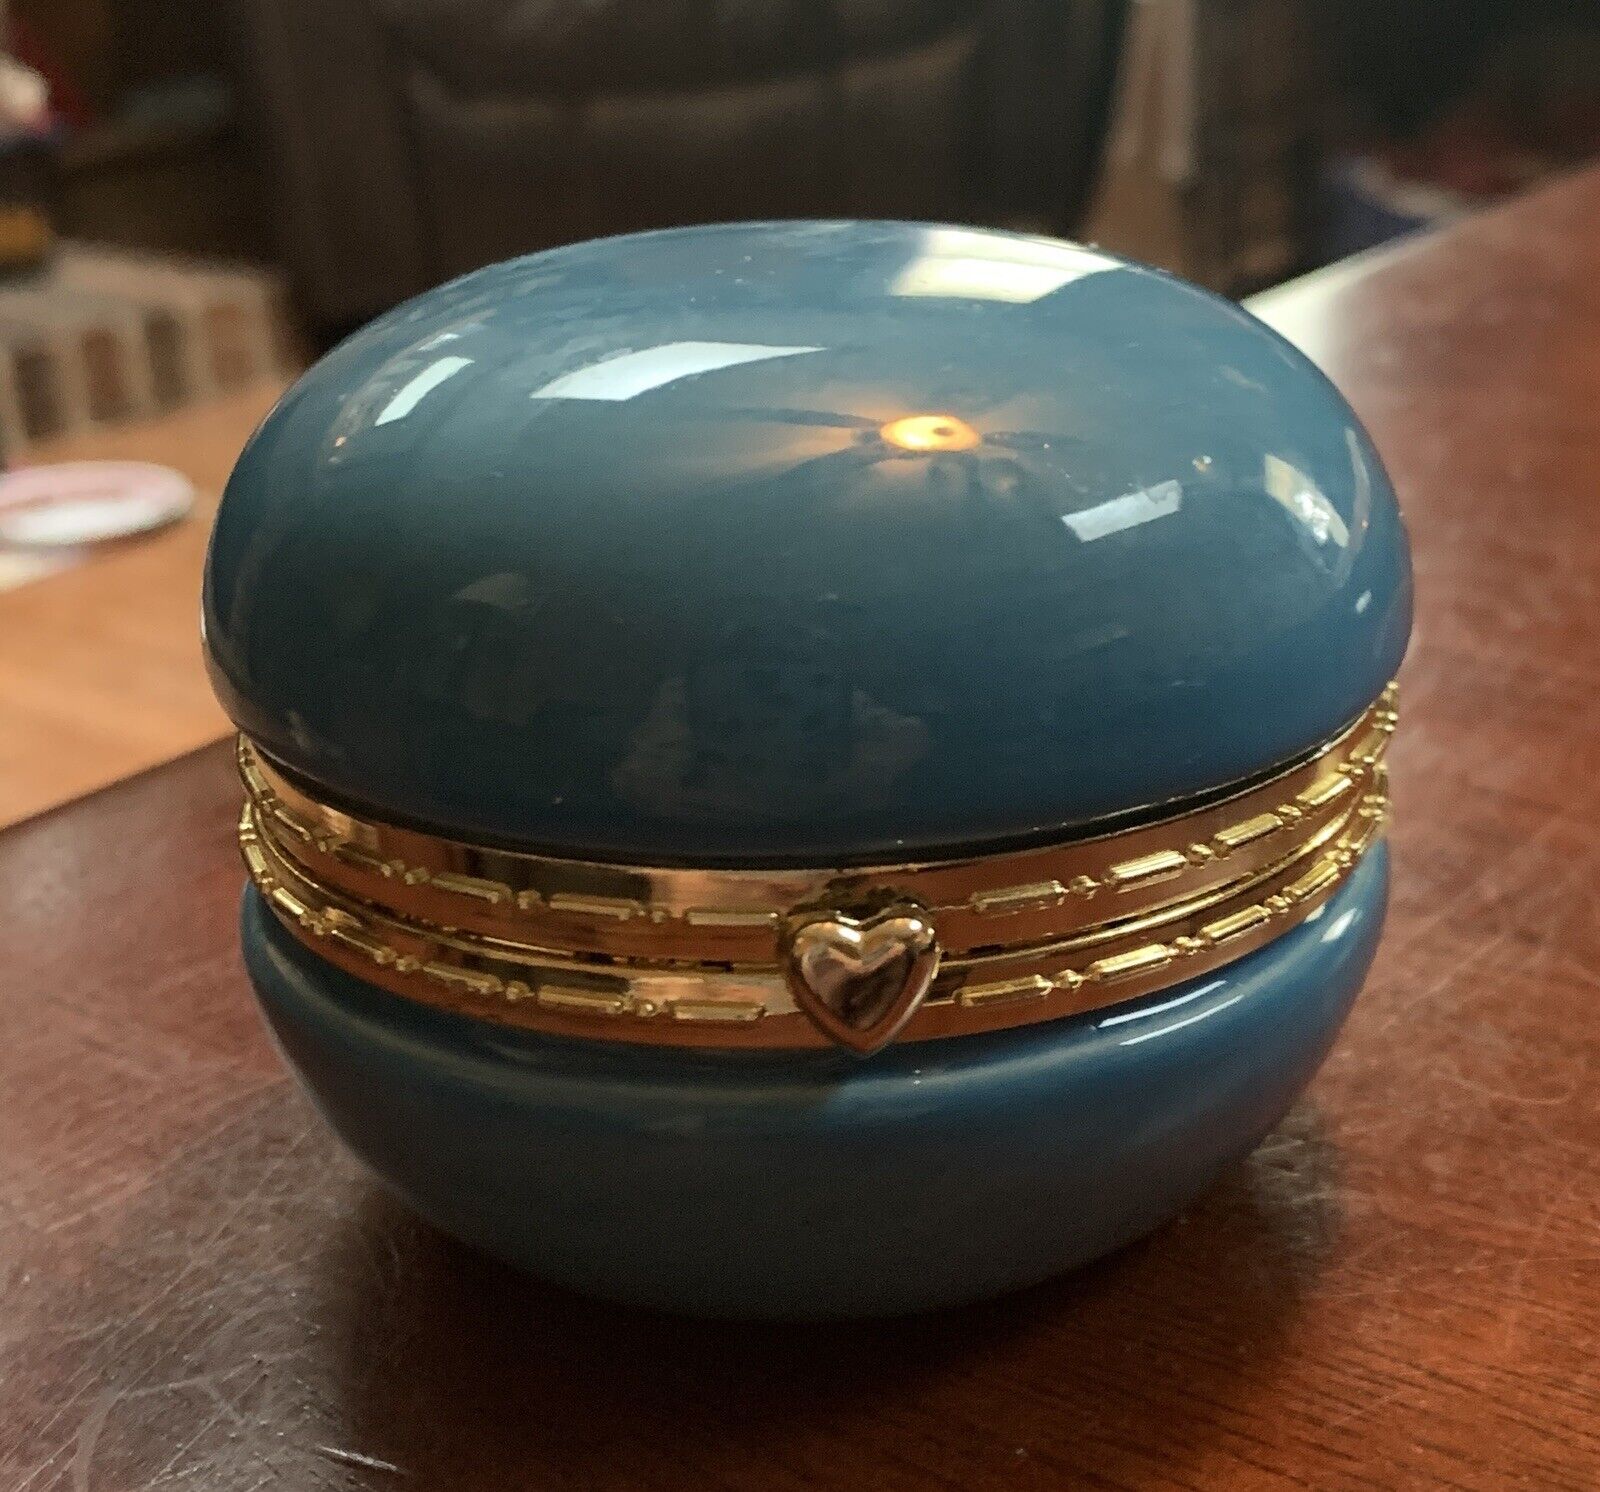 Trinket Hinged Box Ceramic blue Macaron Gold Heart Closure VGUC looks unused